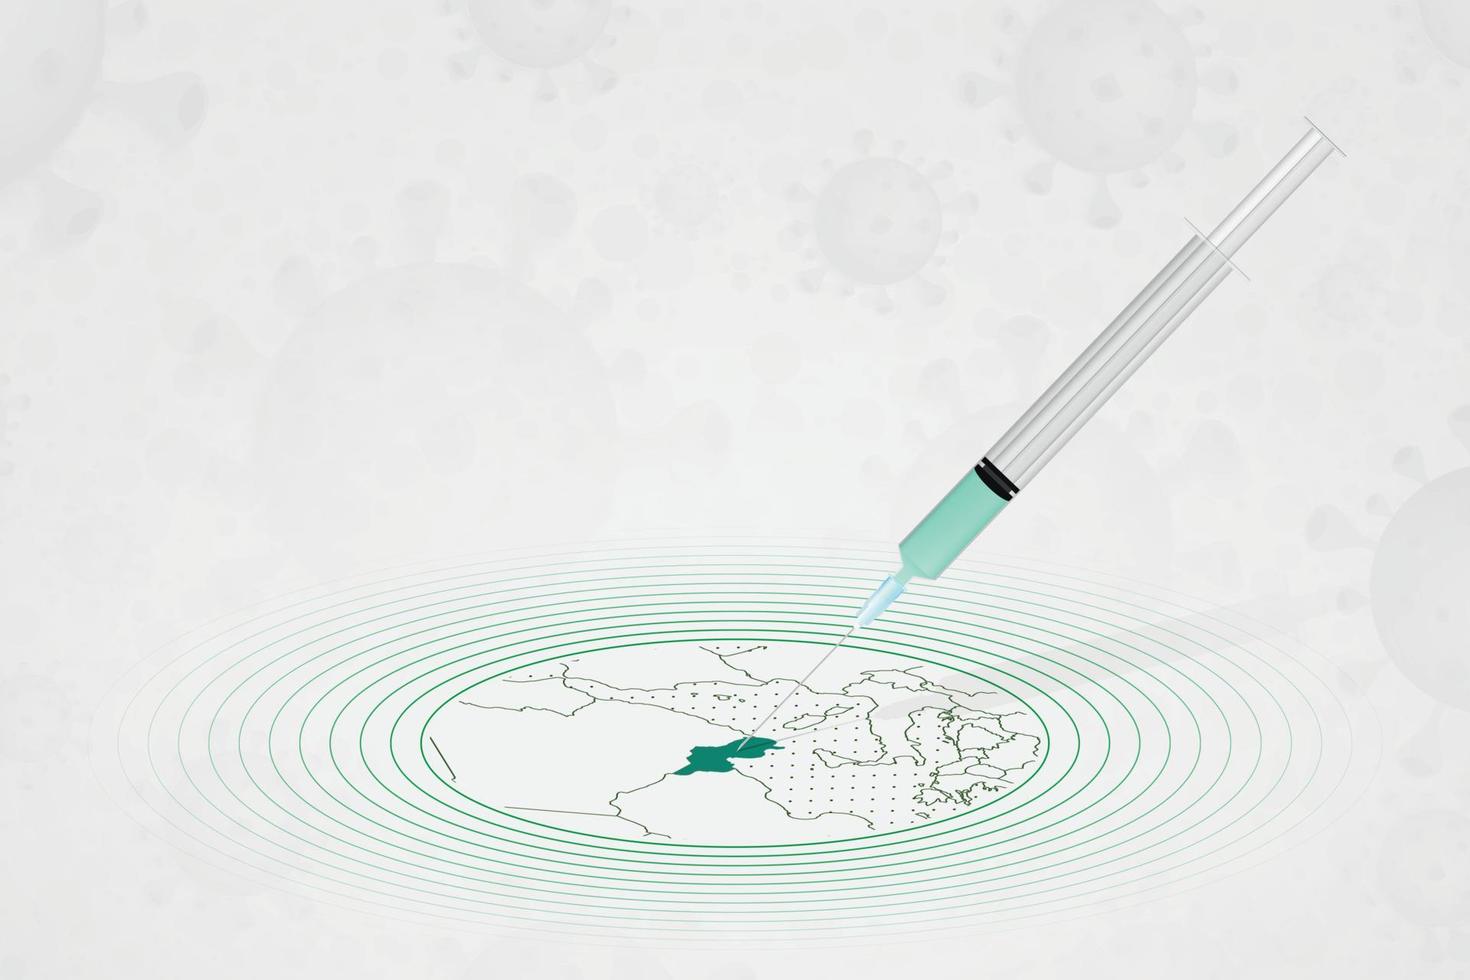 tunesië vaccinatie concept, vaccin injectie in kaart van tunesië. vaccin en vaccinatie tegen coronavirus, covid-19. vector